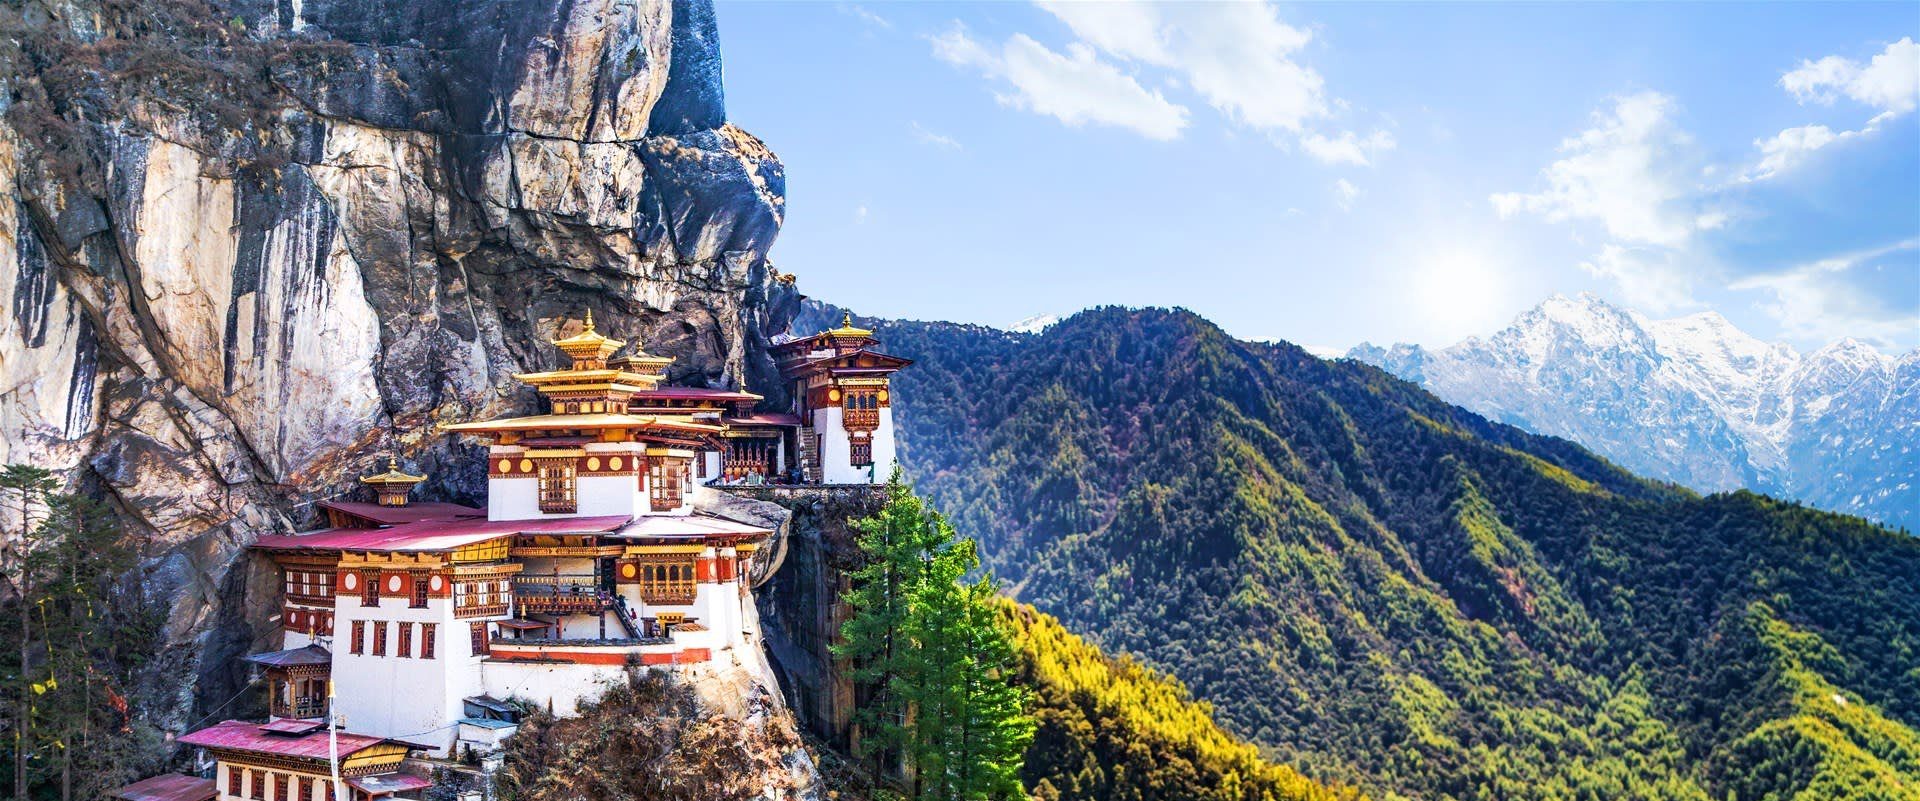 Welcome to Bhutan Tour